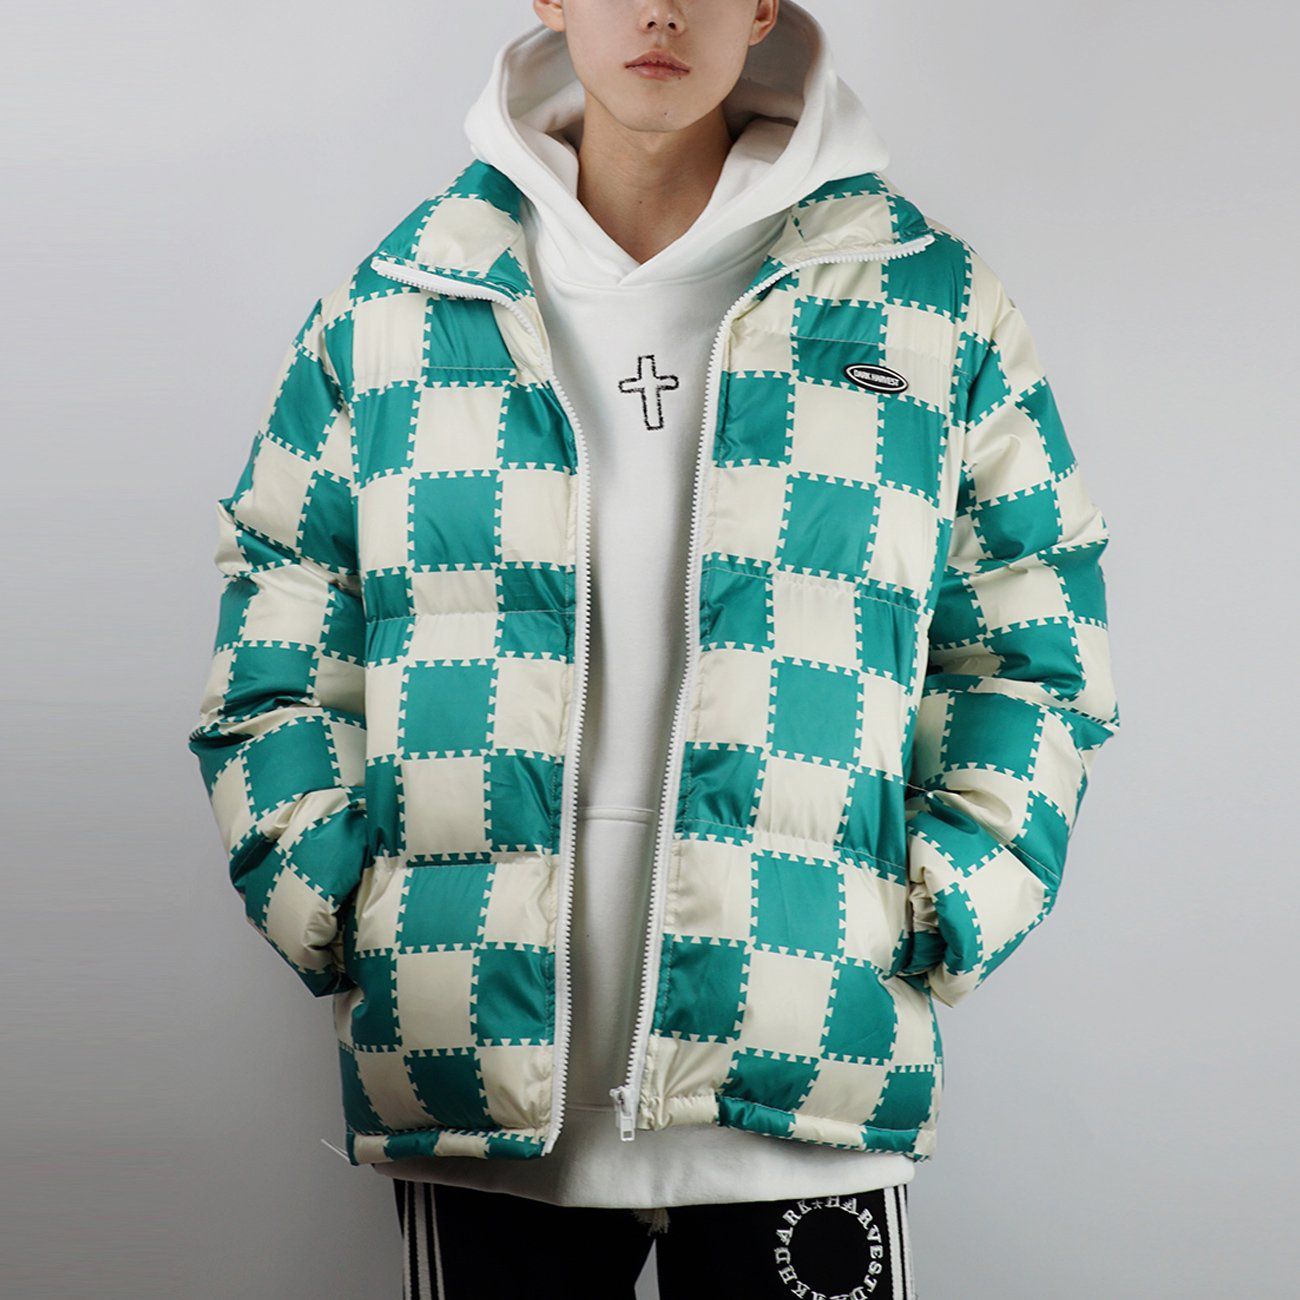 Majesda® - Plaid Print Winter Coat outfit ideas streetwear fashion